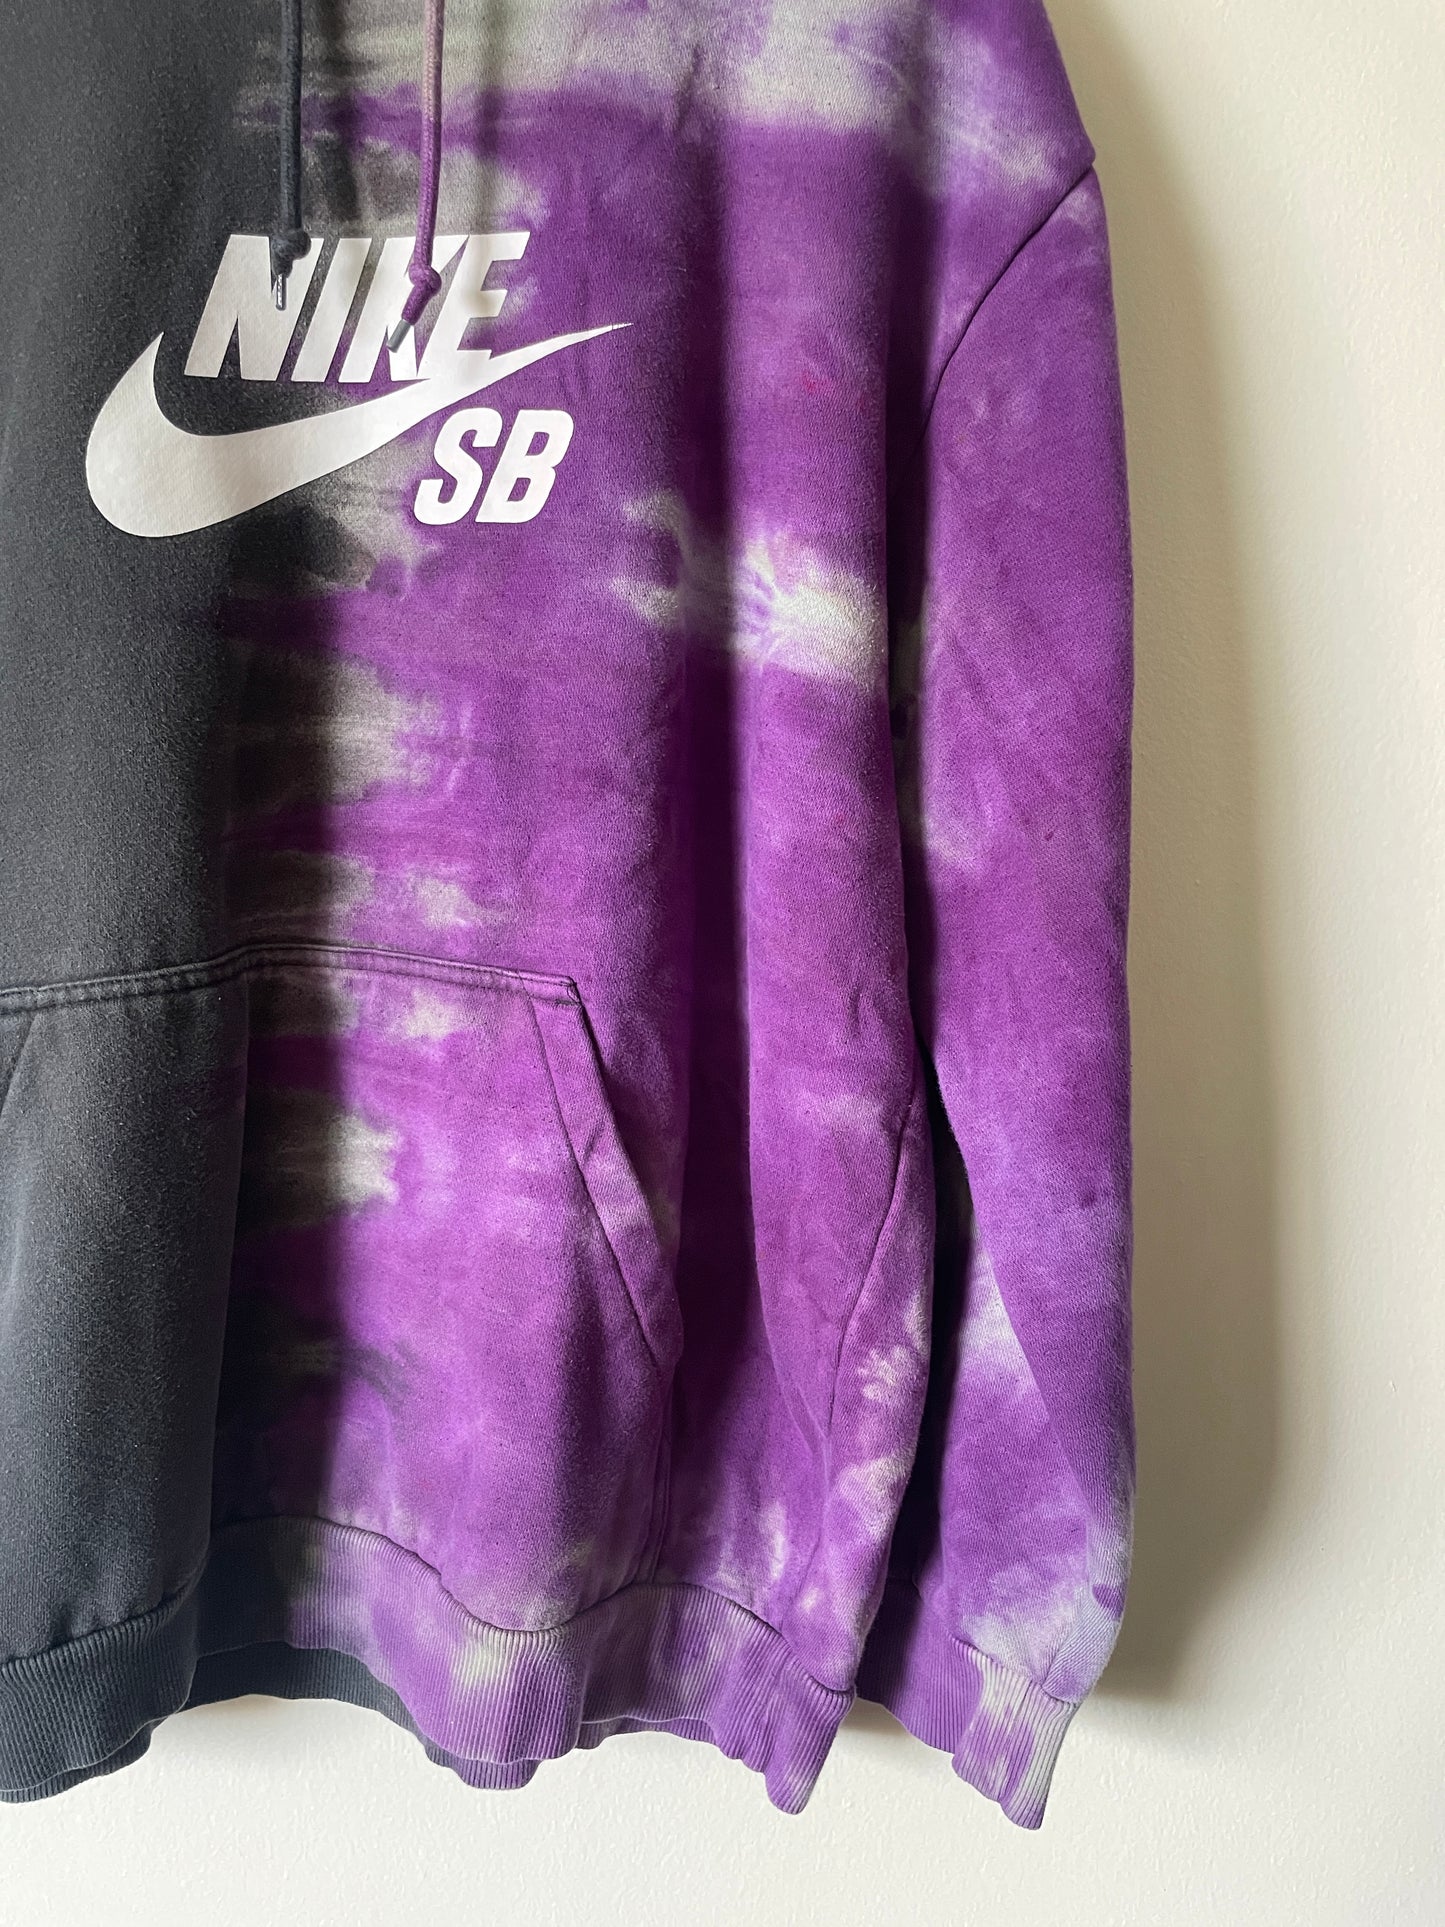 XL Men's Nike SB Reverse Tie Dye Hoodie | One-Of-a-Kind Upcycled Black and Purple Half-and-Half Sweatshirt